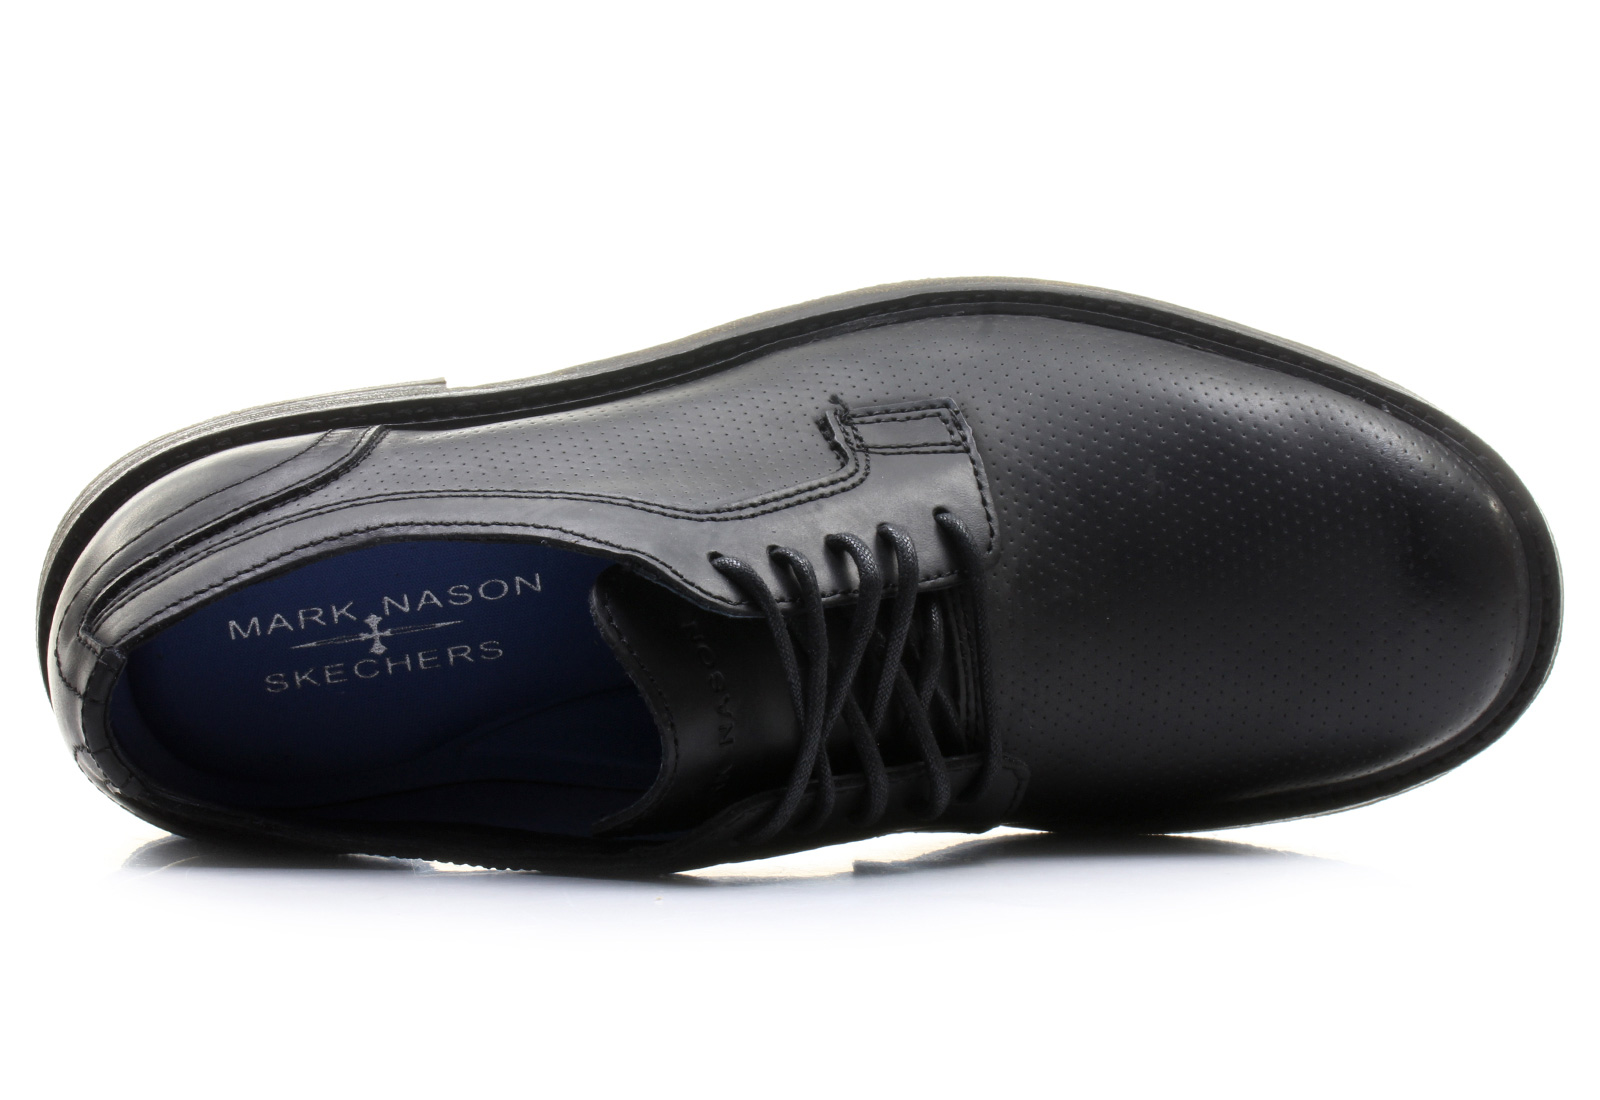 Cipele Ulicu Crne Casual - Bridport - Office Shoes - Online trgovina obuće